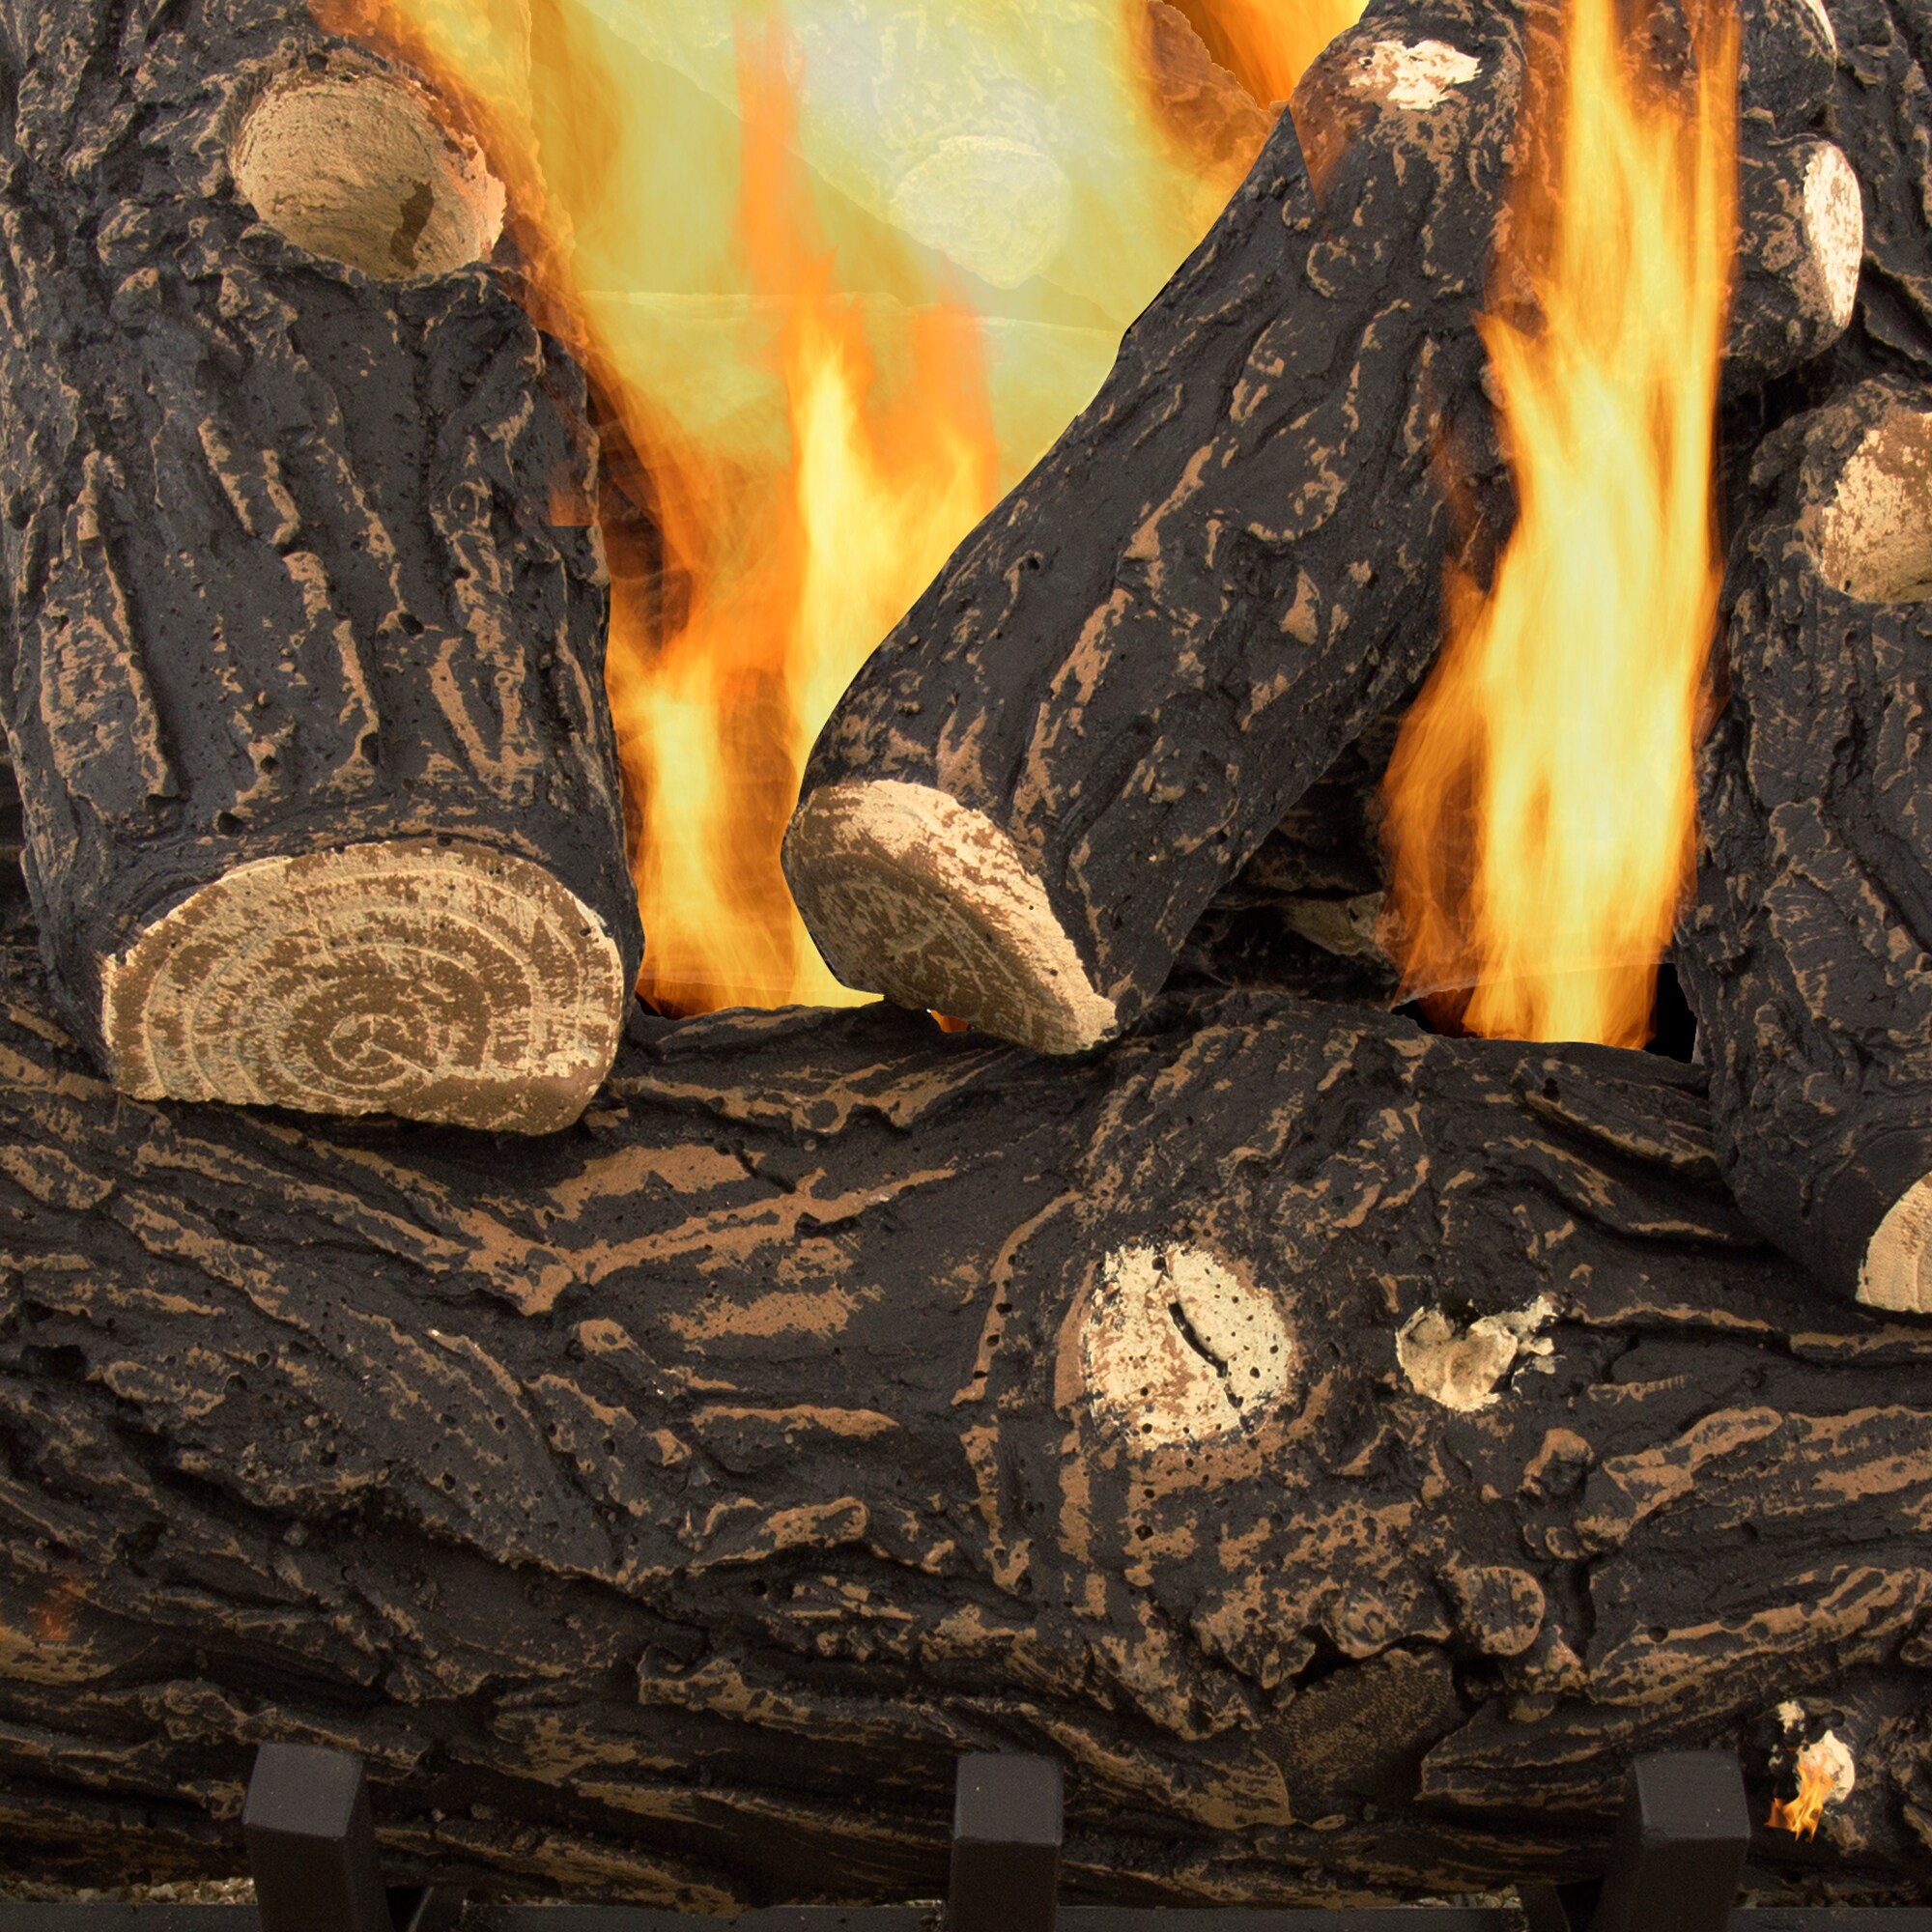 Black Fireplace Hood Accessory - 6252 - Vented Gas Log Sets & Accessorie -  Gas Logs Gas Appliances